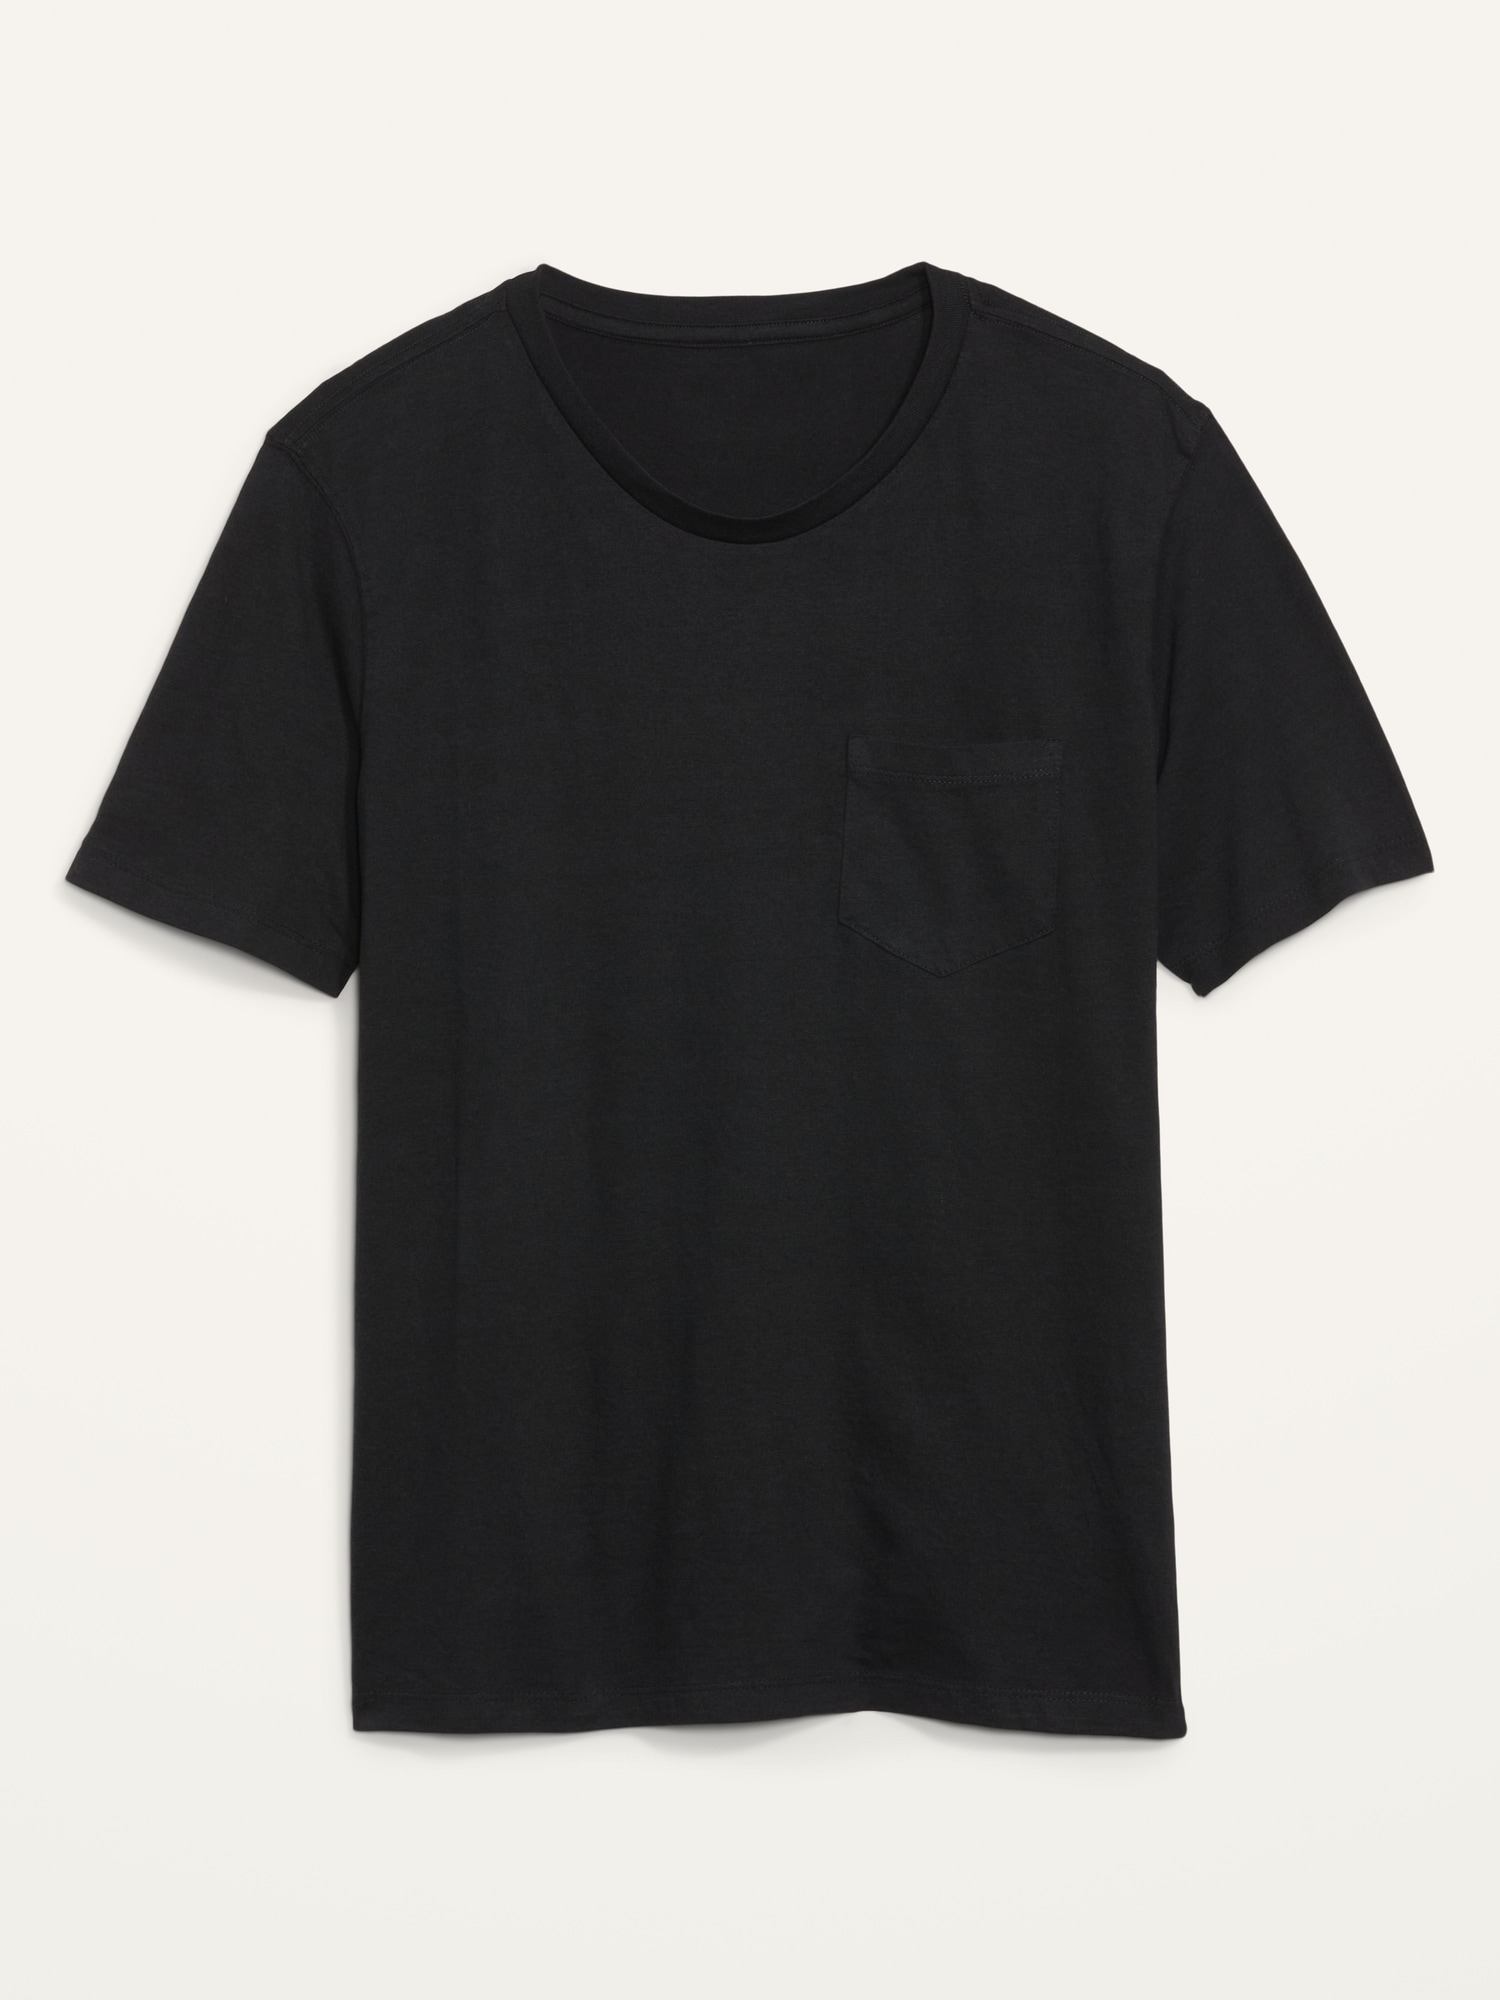 Soft-Washed Chest-Pocket Crew-Neck T-Shirt for Men